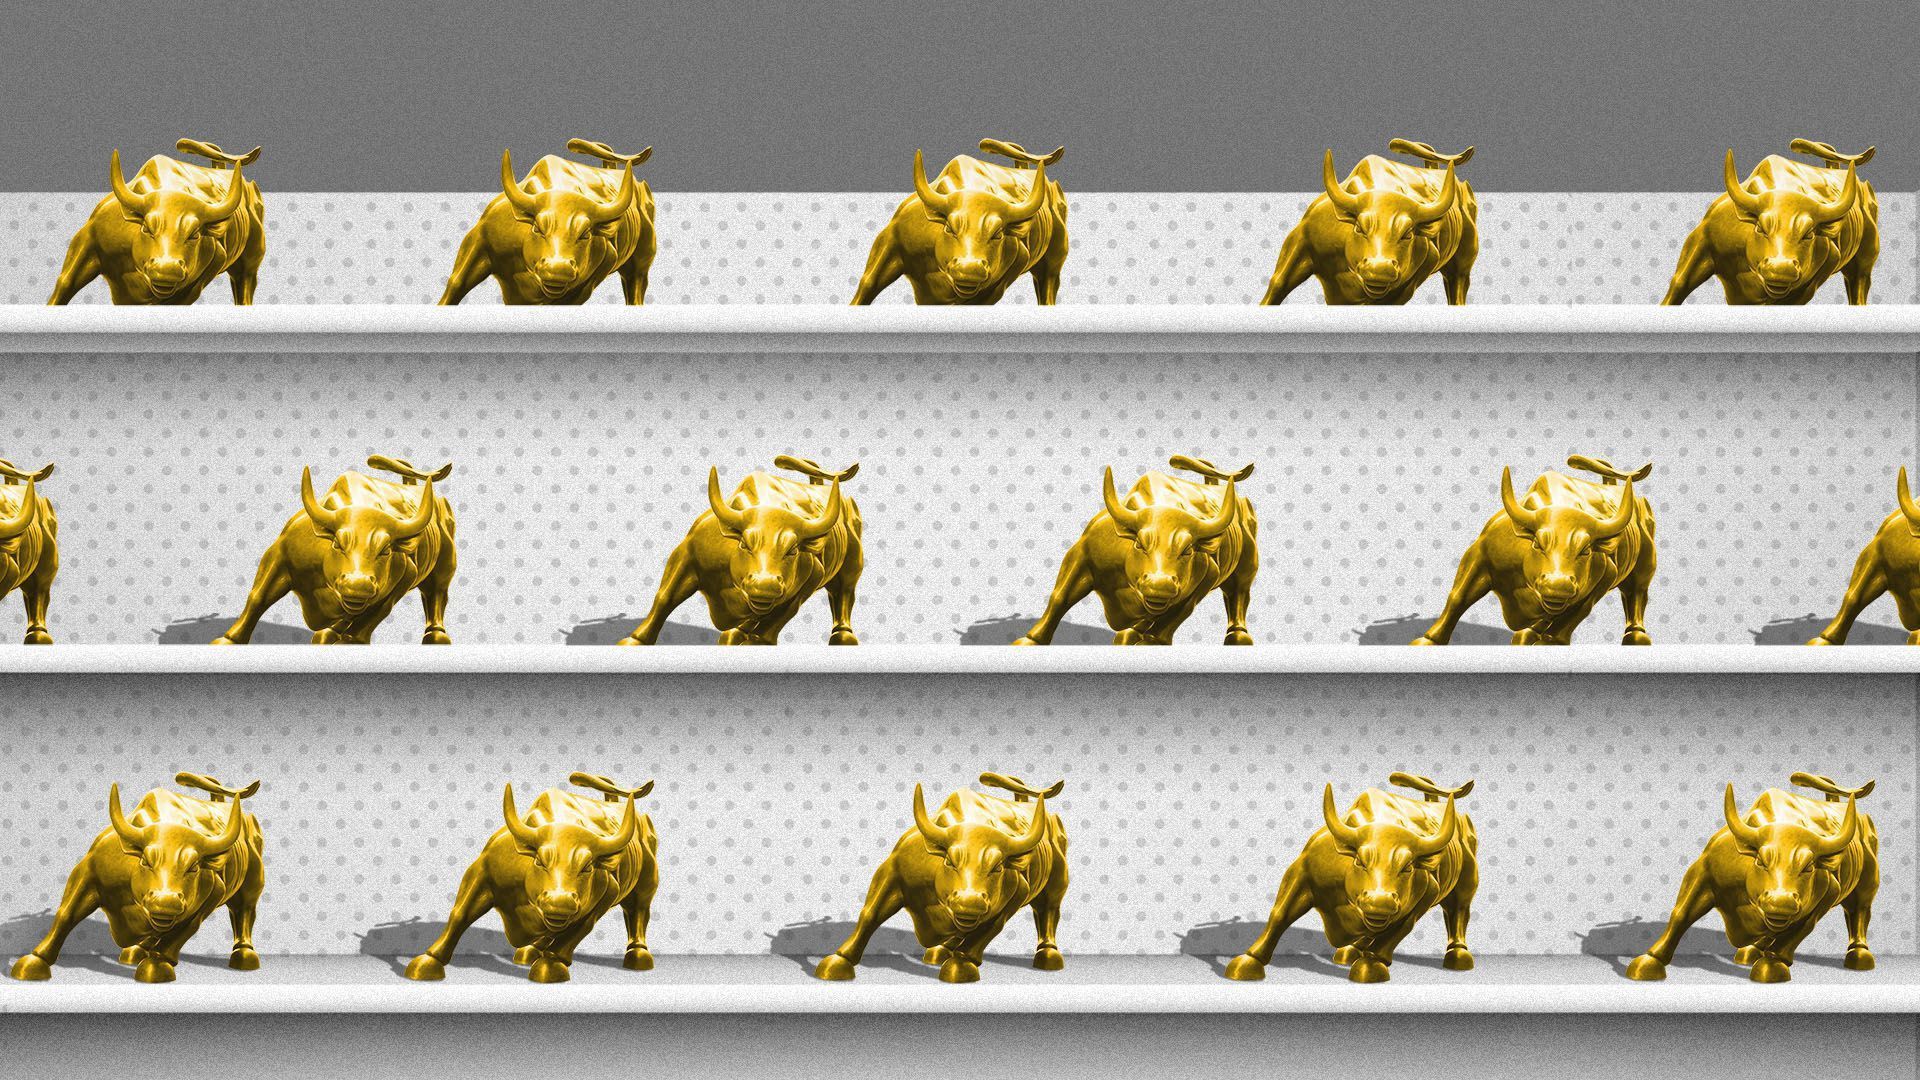 Illustration of gold rhinos on a shelf.